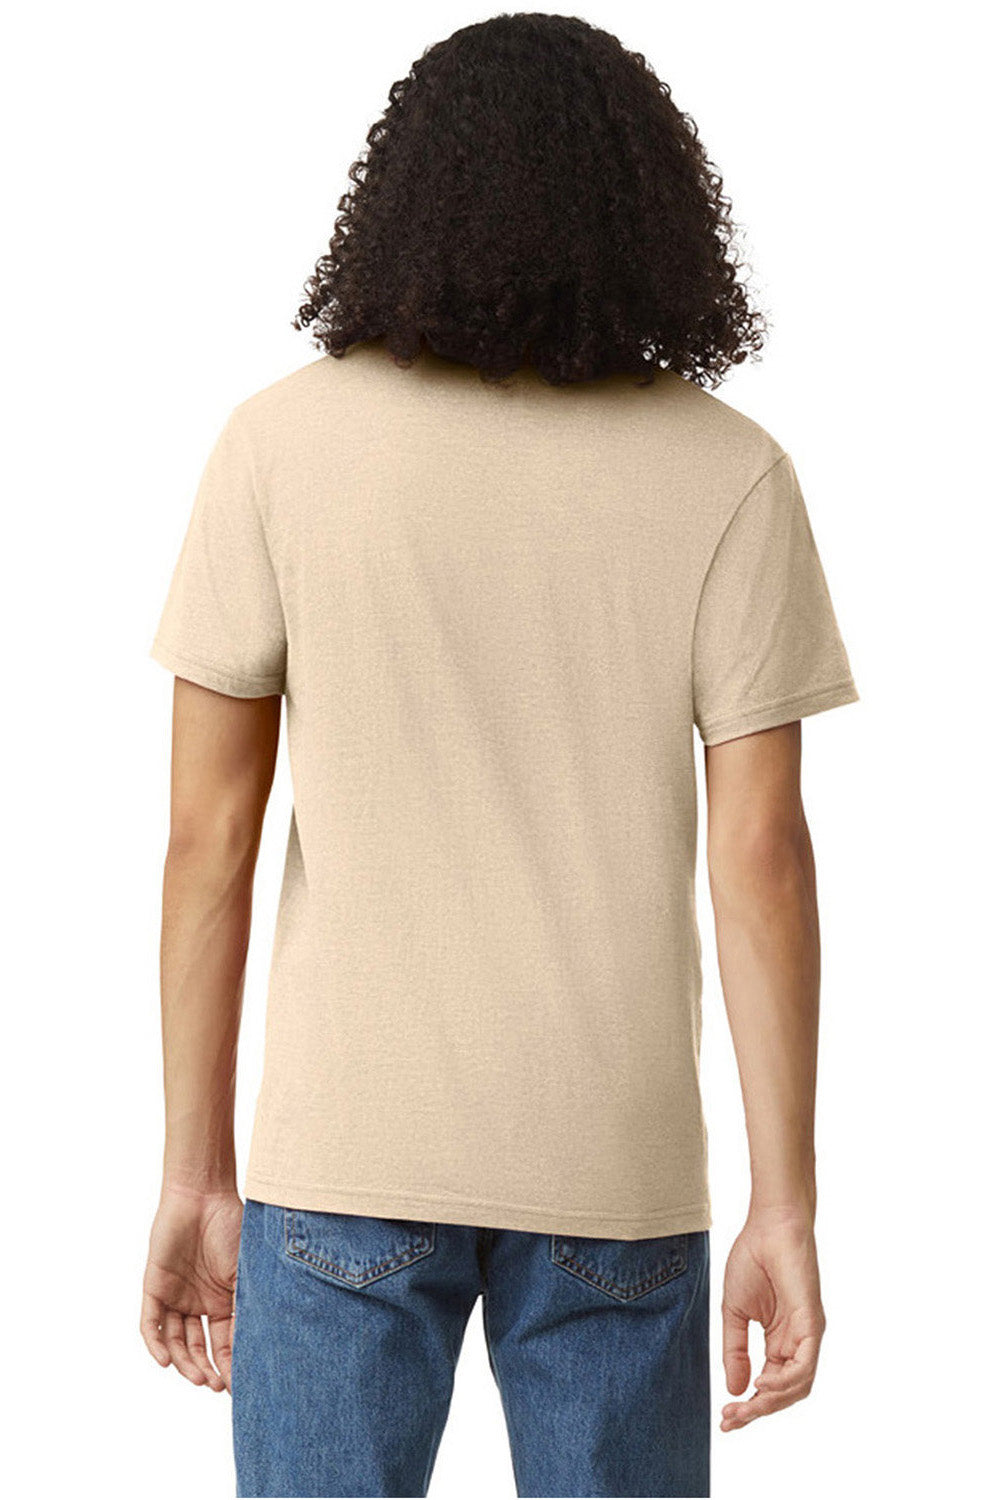 American Apparel 2006CVC Mens CVC Short Sleeve V-Neck T-Shirt Heather Bone Model Back